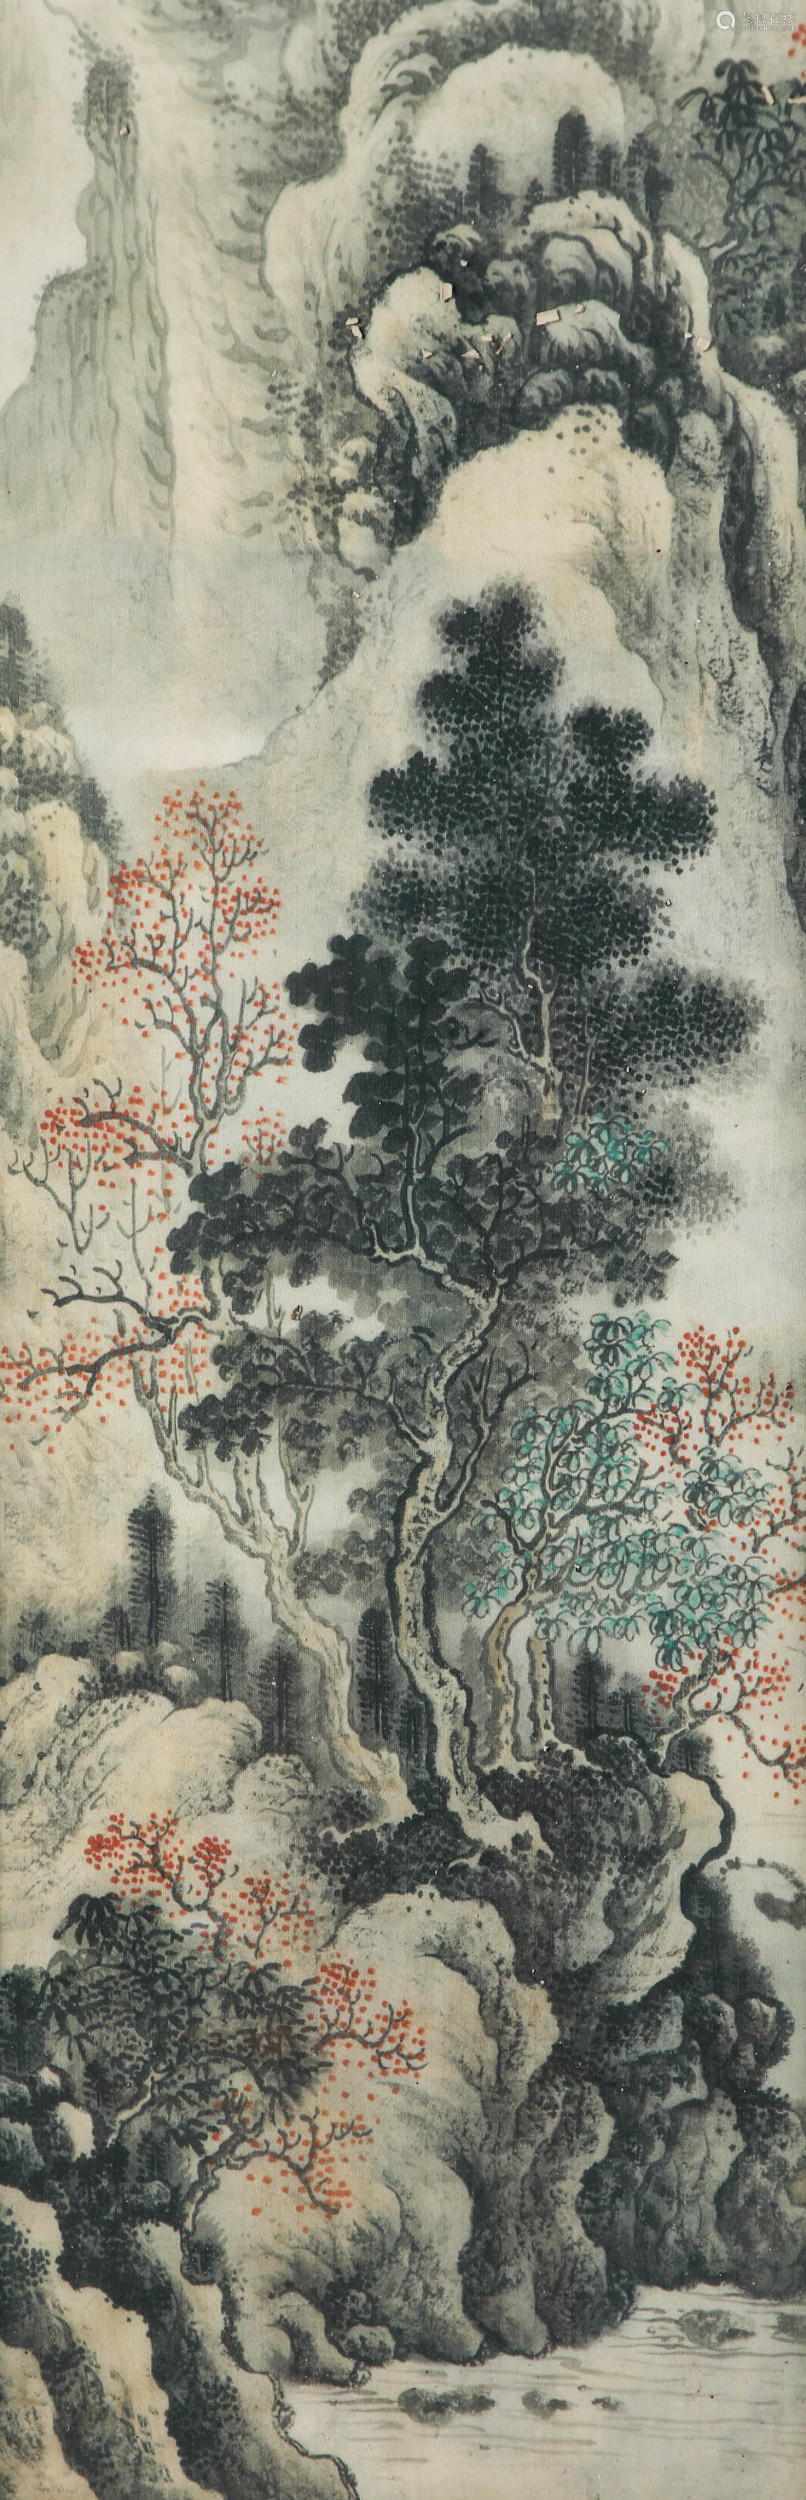 Chinese ink painting,
Zhang Hongqian's Landscape Double Scen...